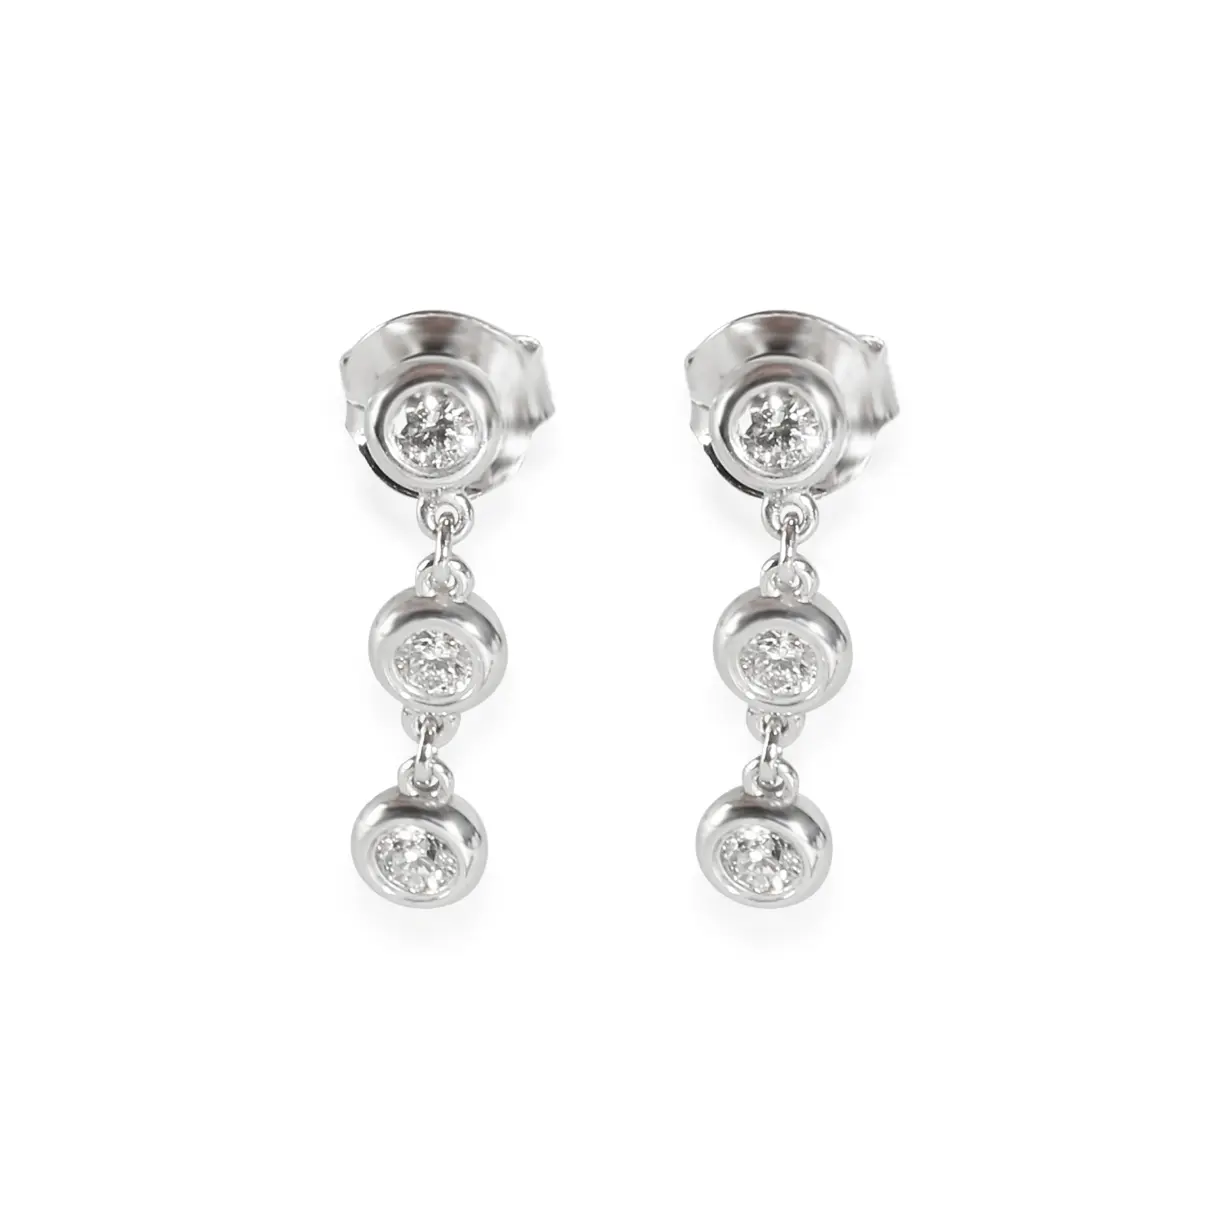 Elsa Peretti silver earrings